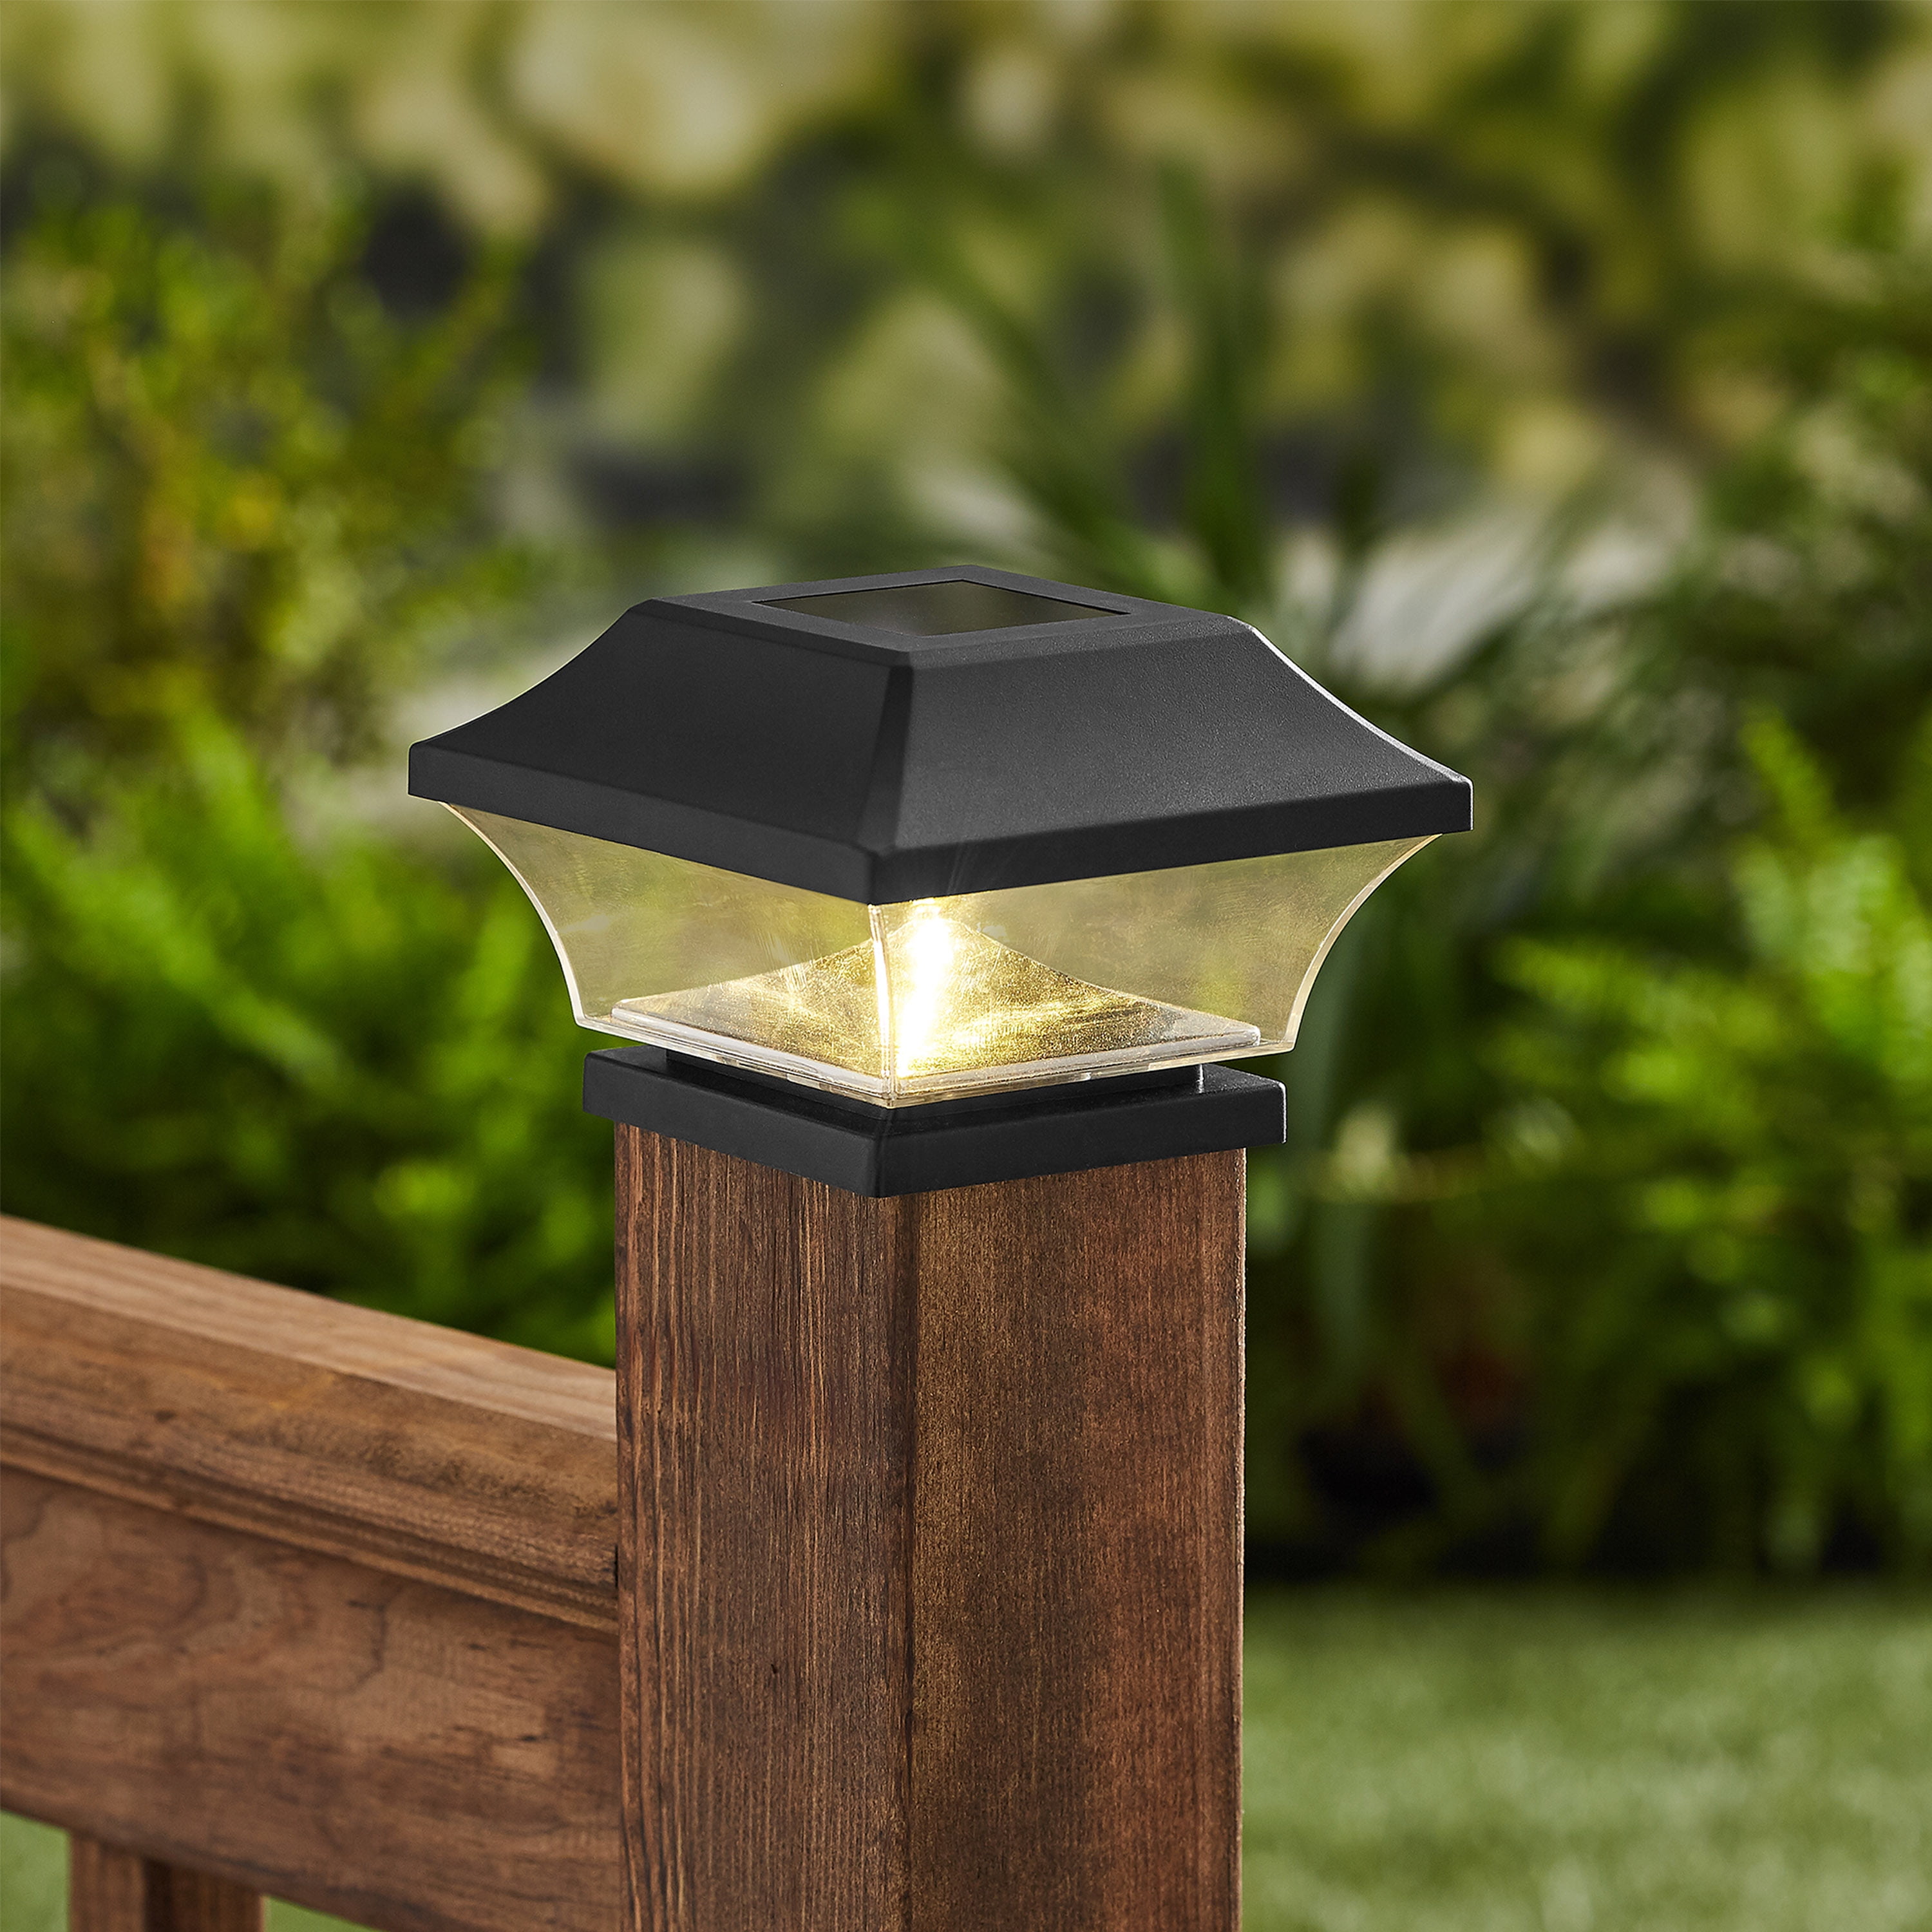 2-PACK BRONZE SOLAR LED DECK POST CAP LIGHT 4"x4" 6"x6" Outdoor Garden Lighting.